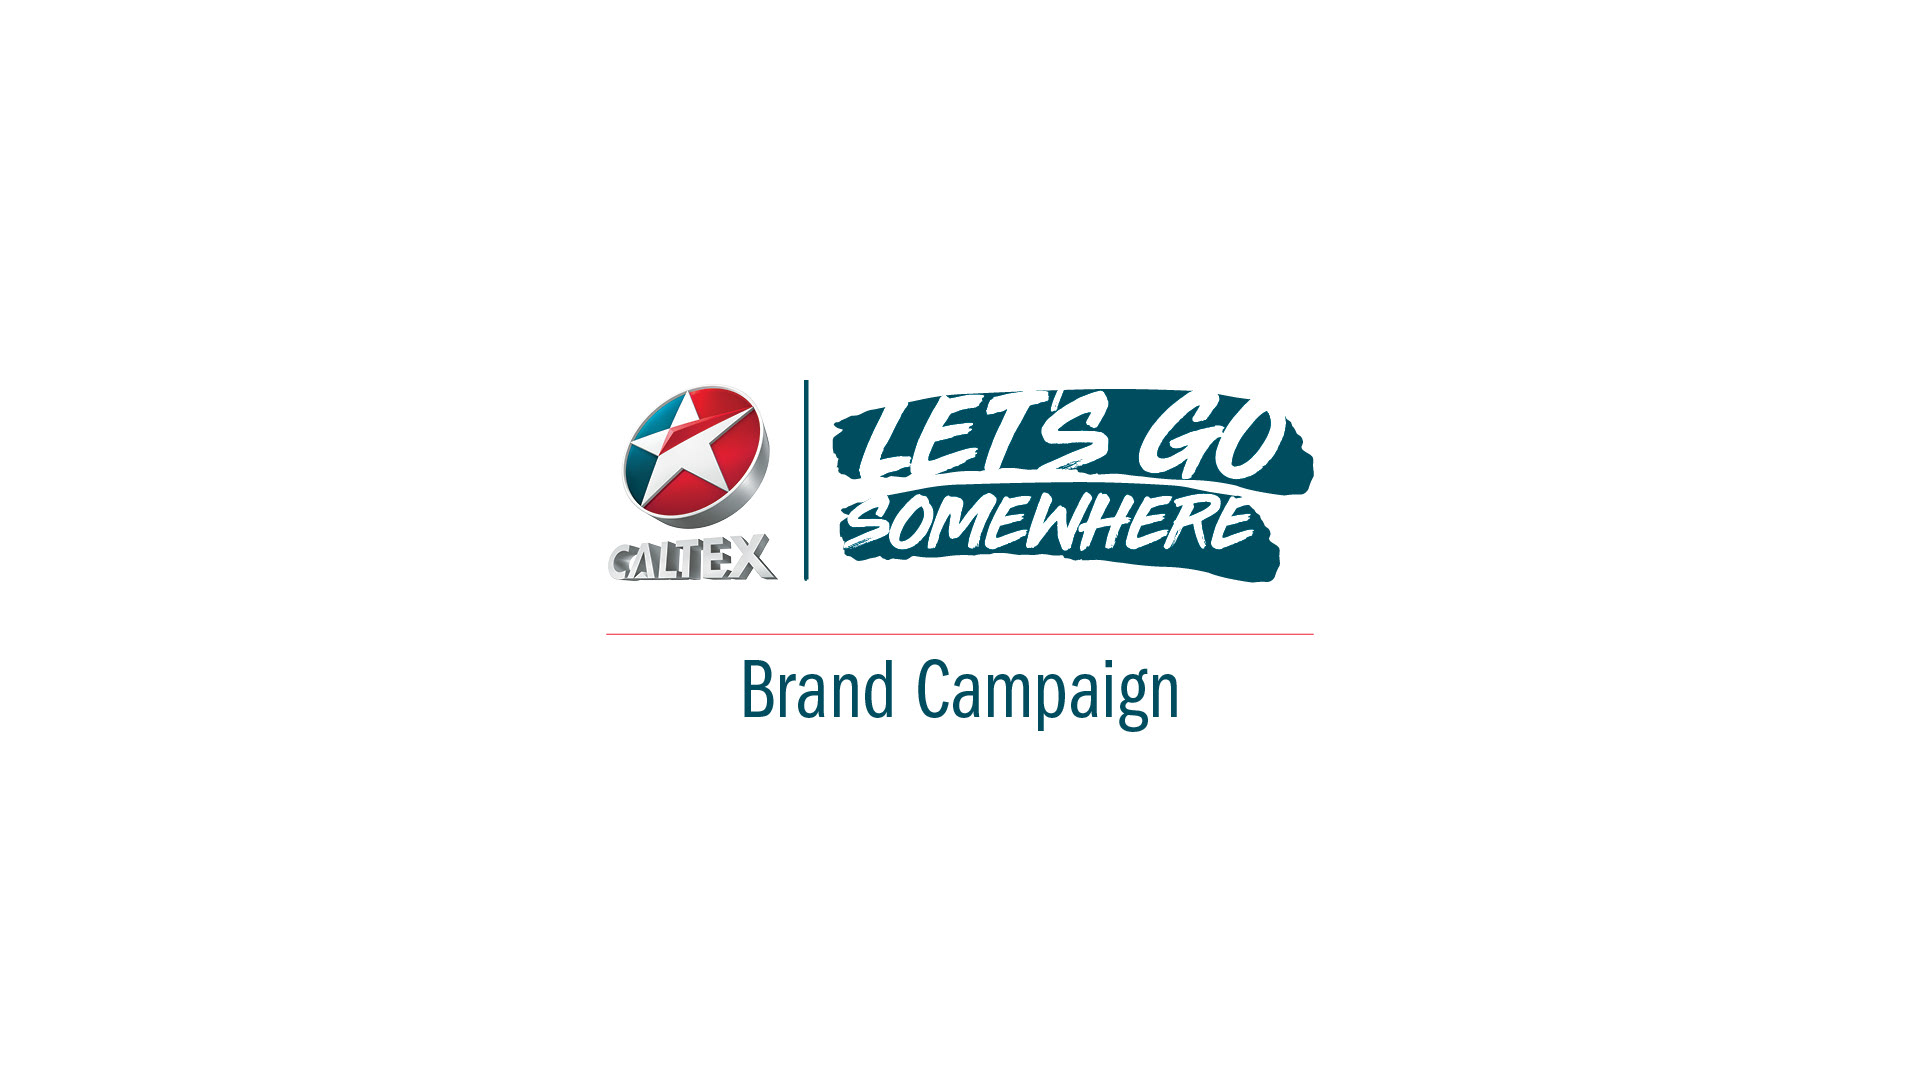 mzi swartbooi - Let's Go Somewhere: Brand Campaign